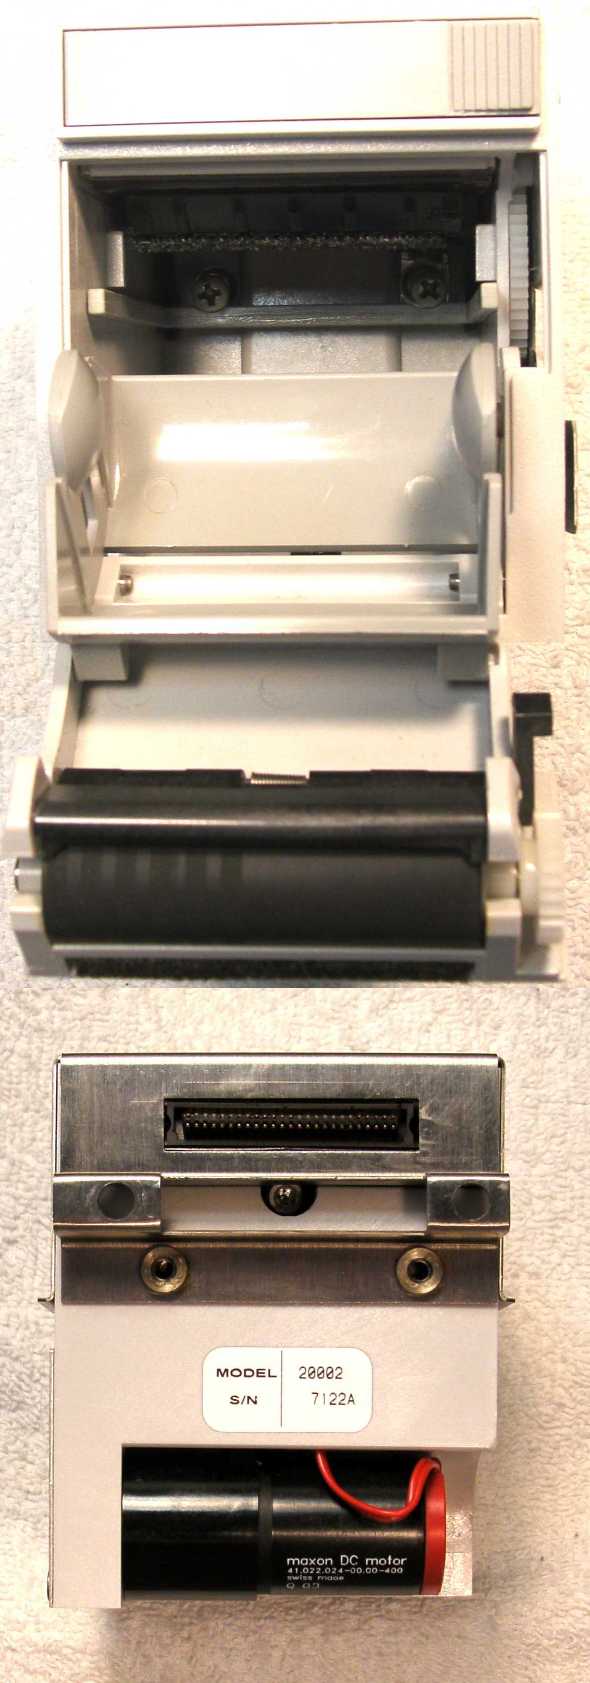 MDE Escort Prism SE mod 20414-103 thermal printer